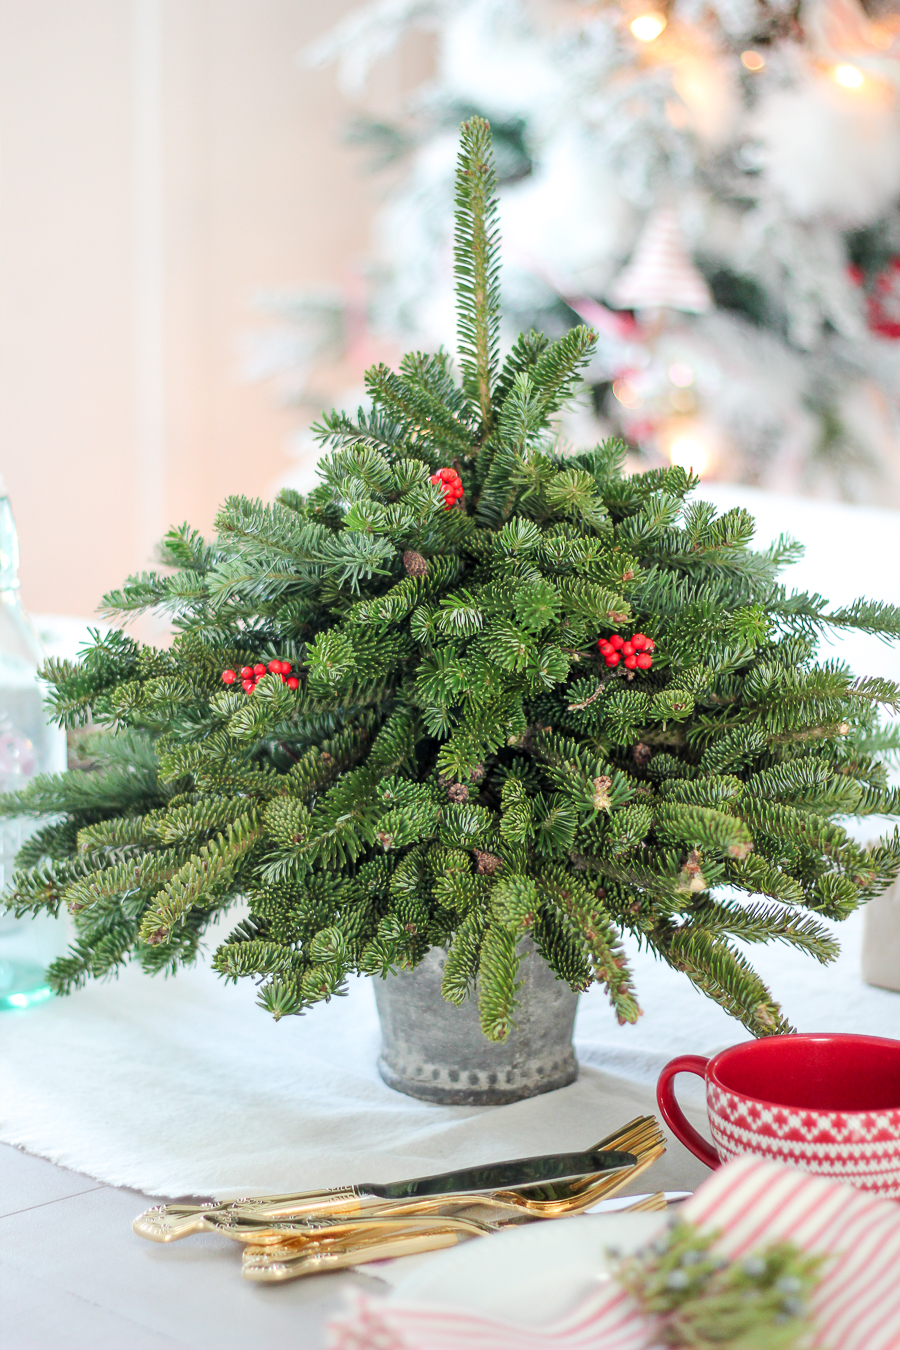 DIY tabletop Christmas tree from free fir clippings (via www.craftberrybush.com)